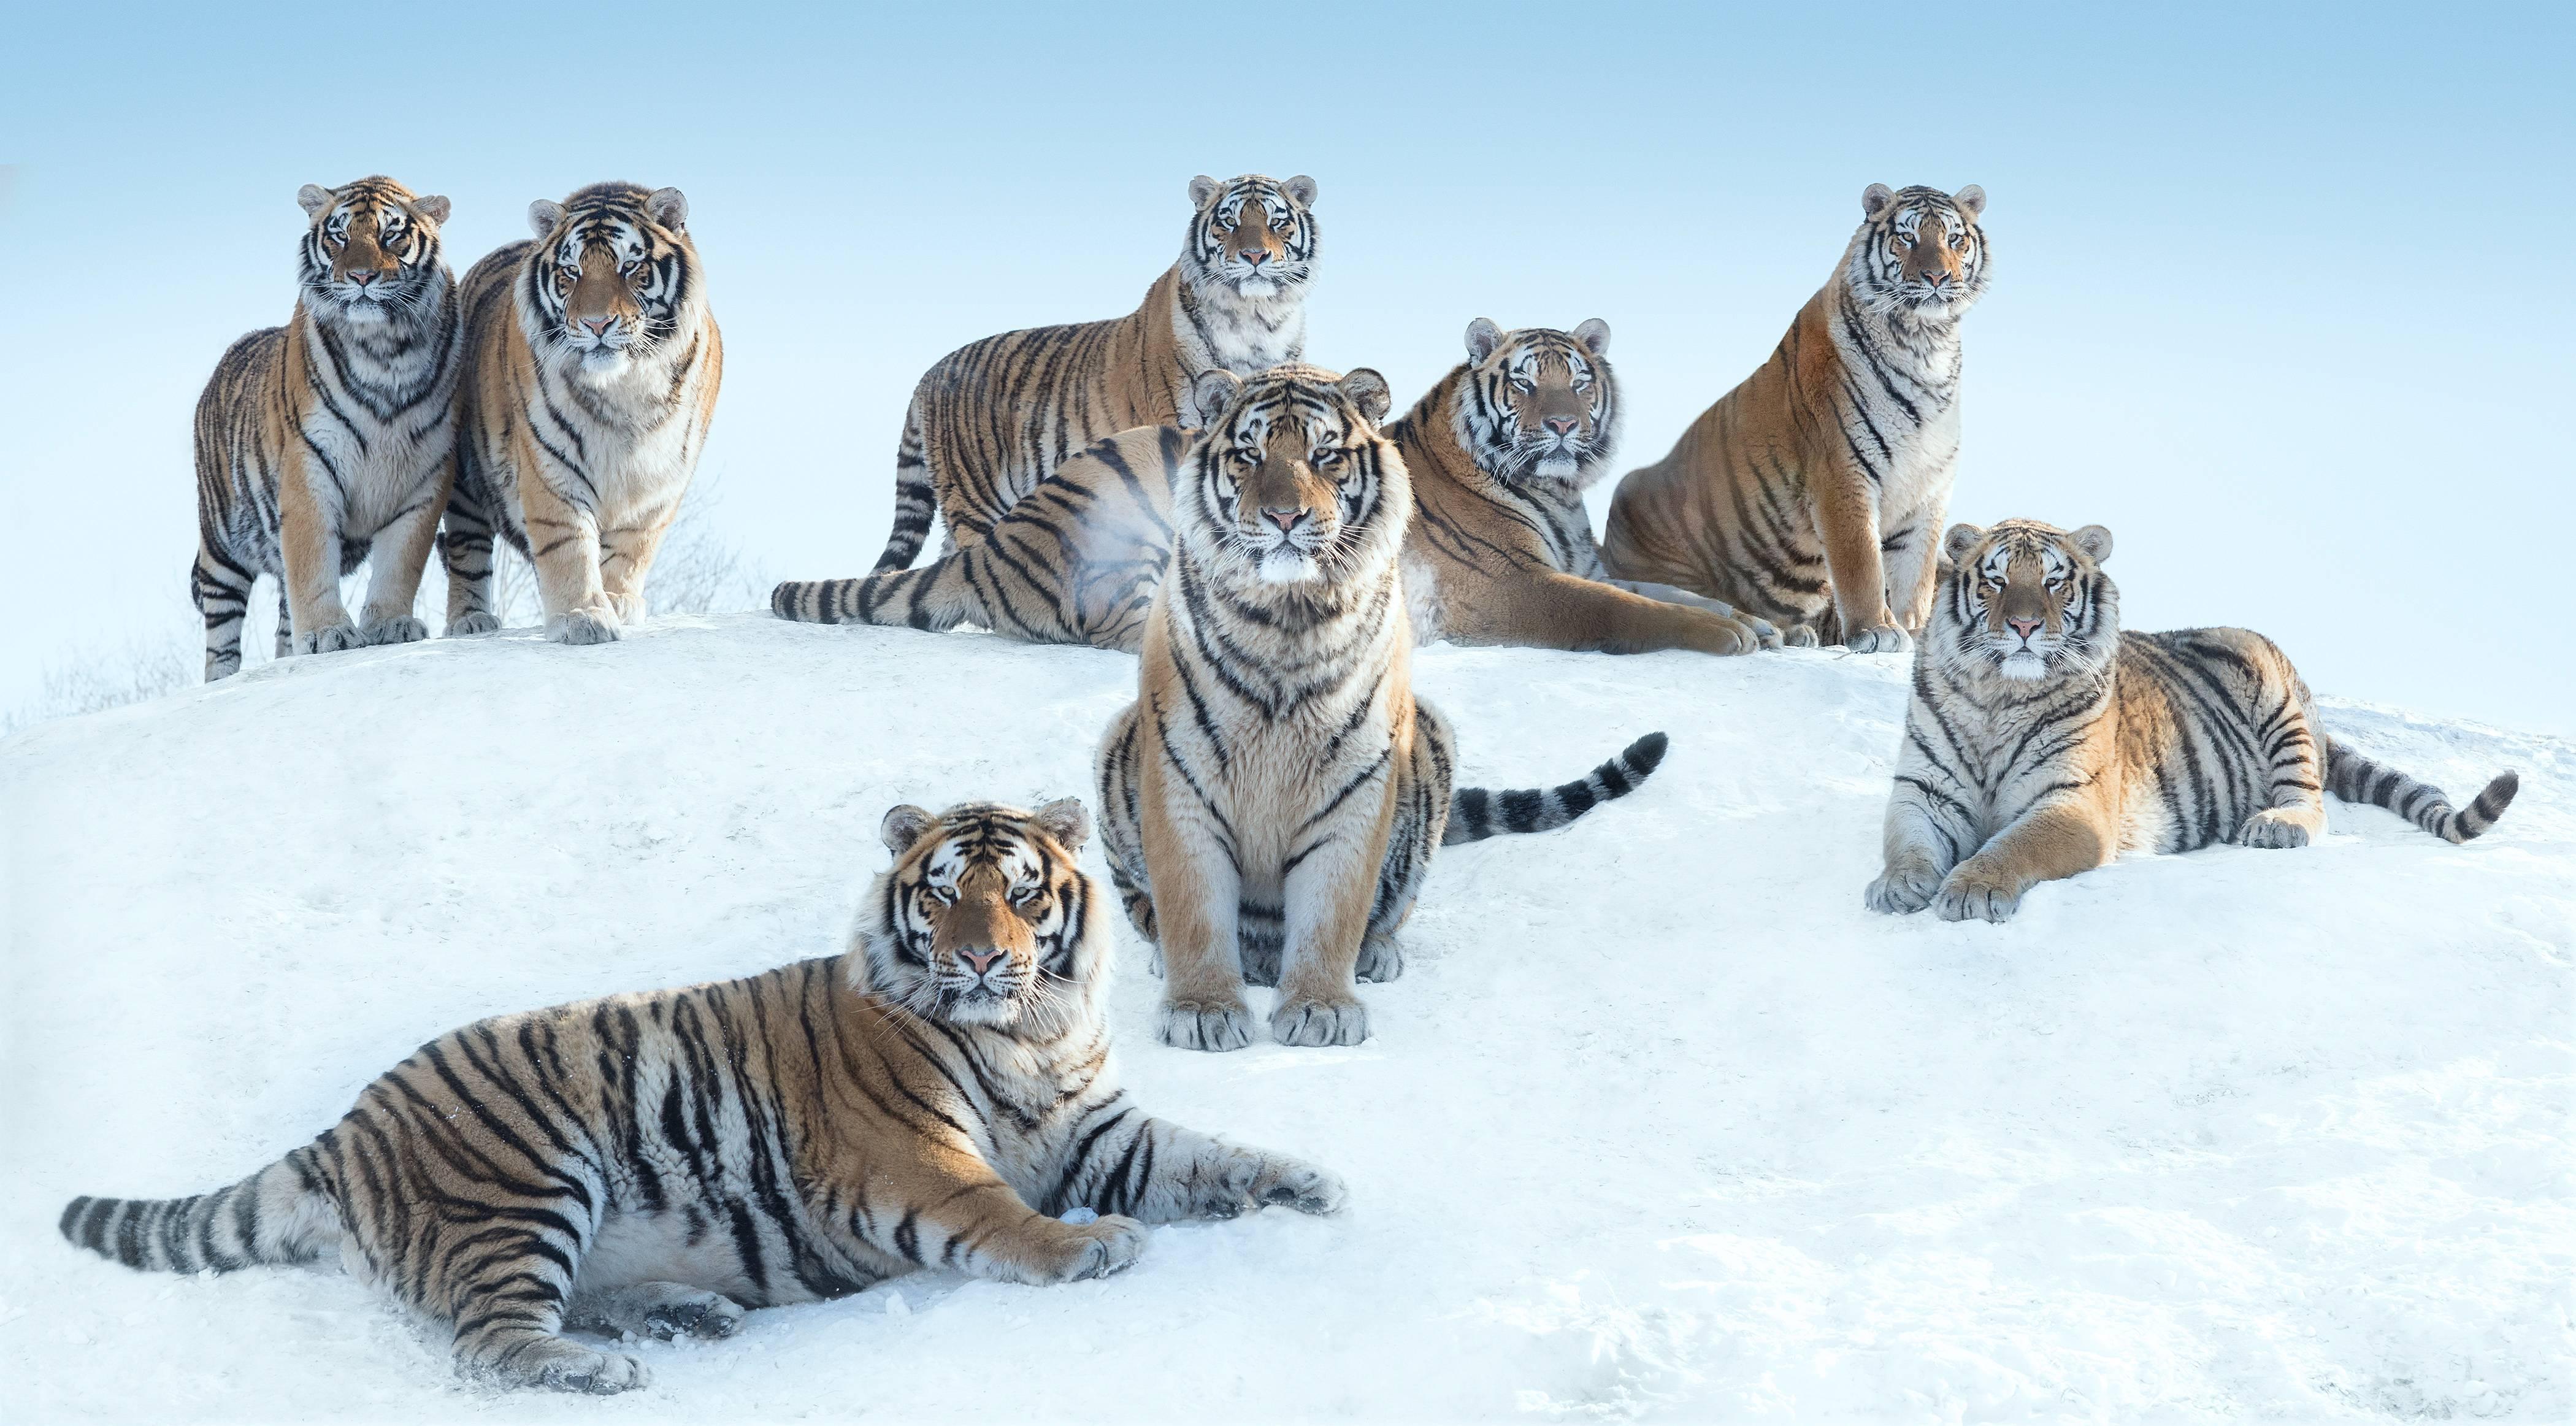 The Siberians by David Yarrow - Tigers 